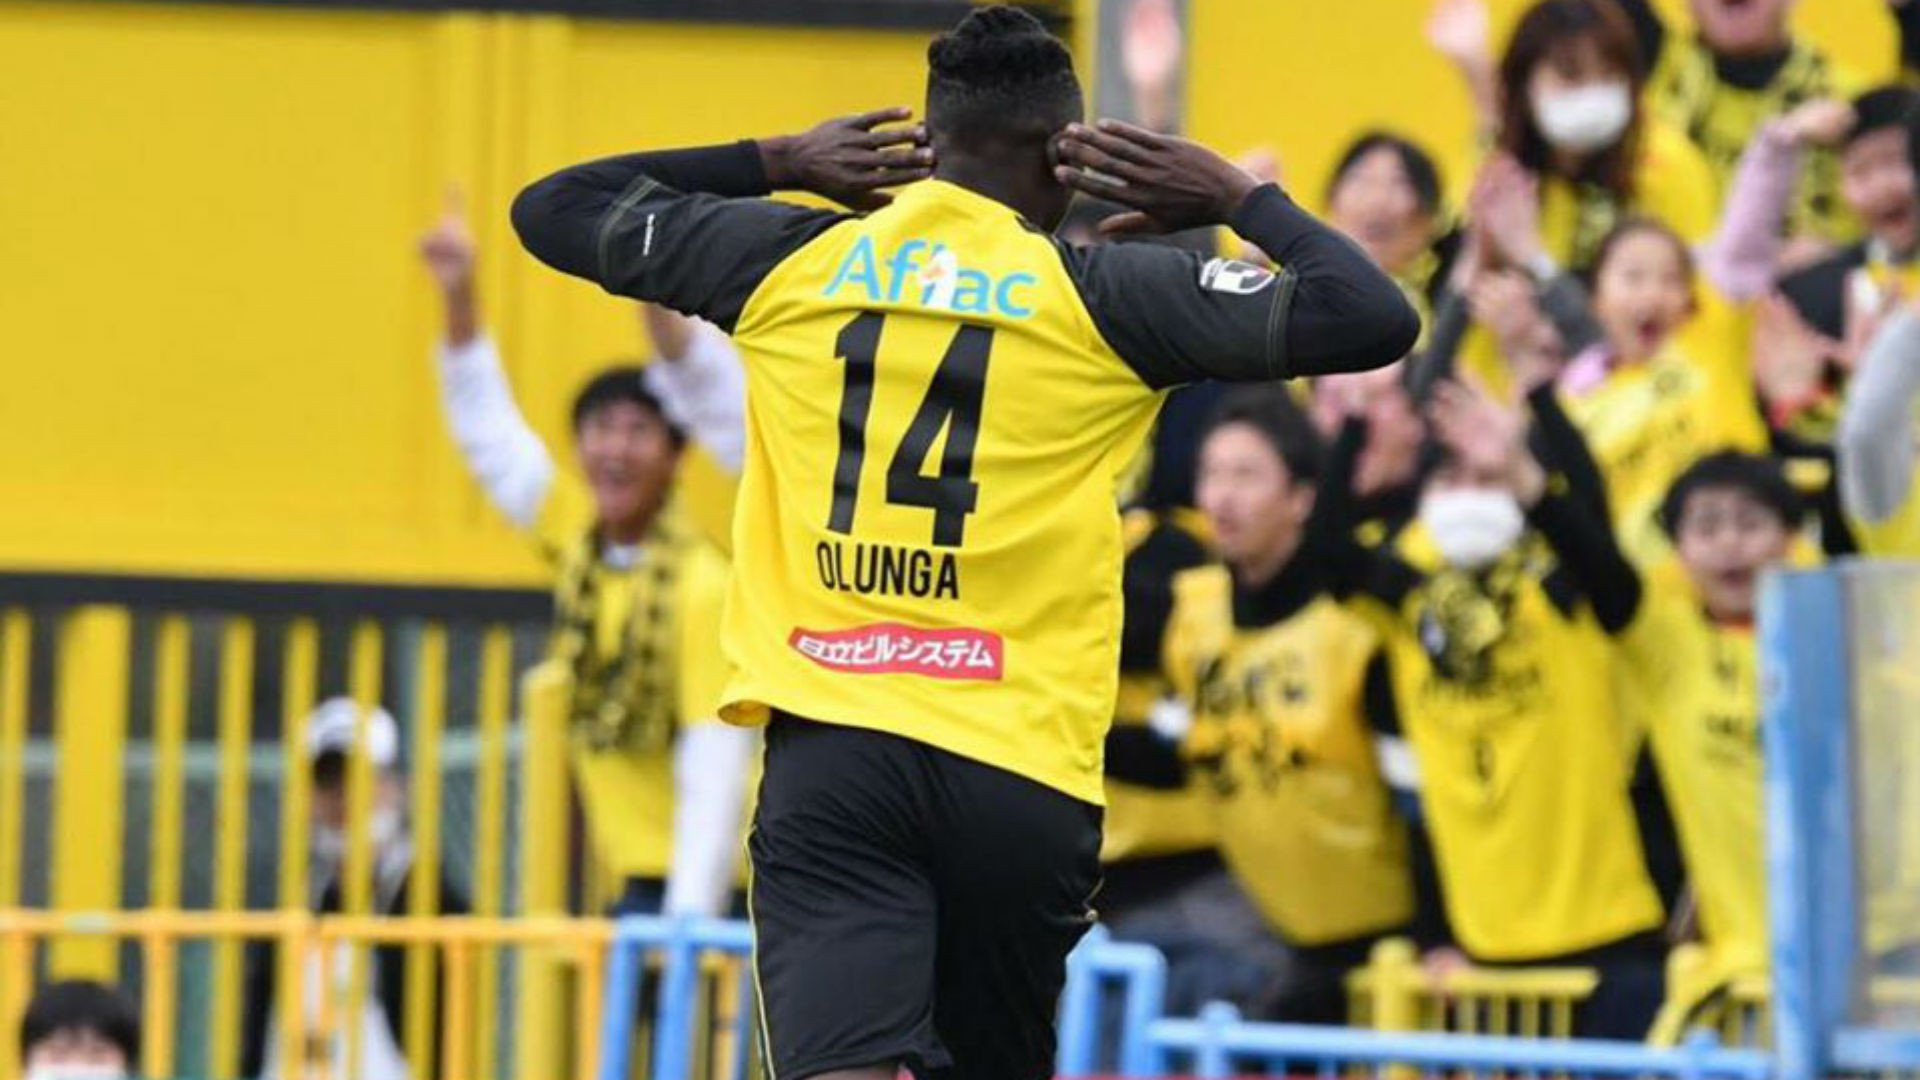 Coronavirus: I was hitting form when the J-League stopped – Olunga